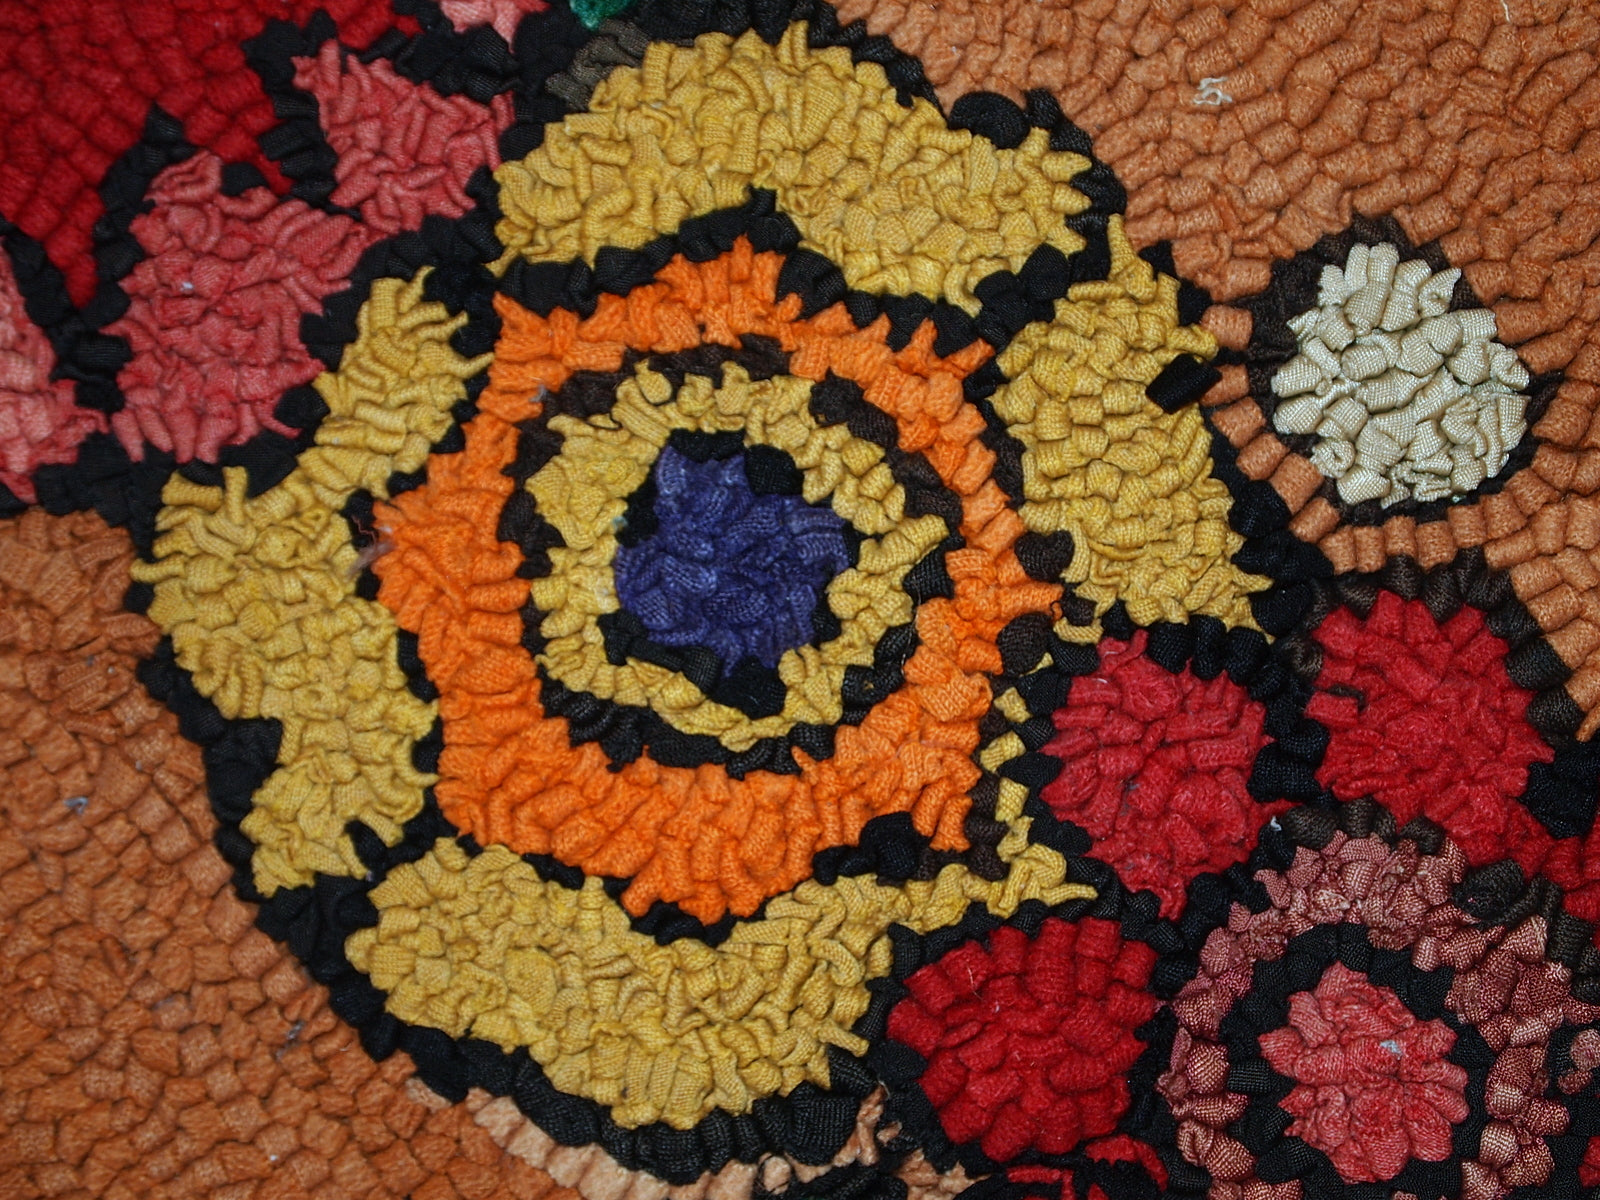 Detailed shot of the orange and green flower design on the handmade rug